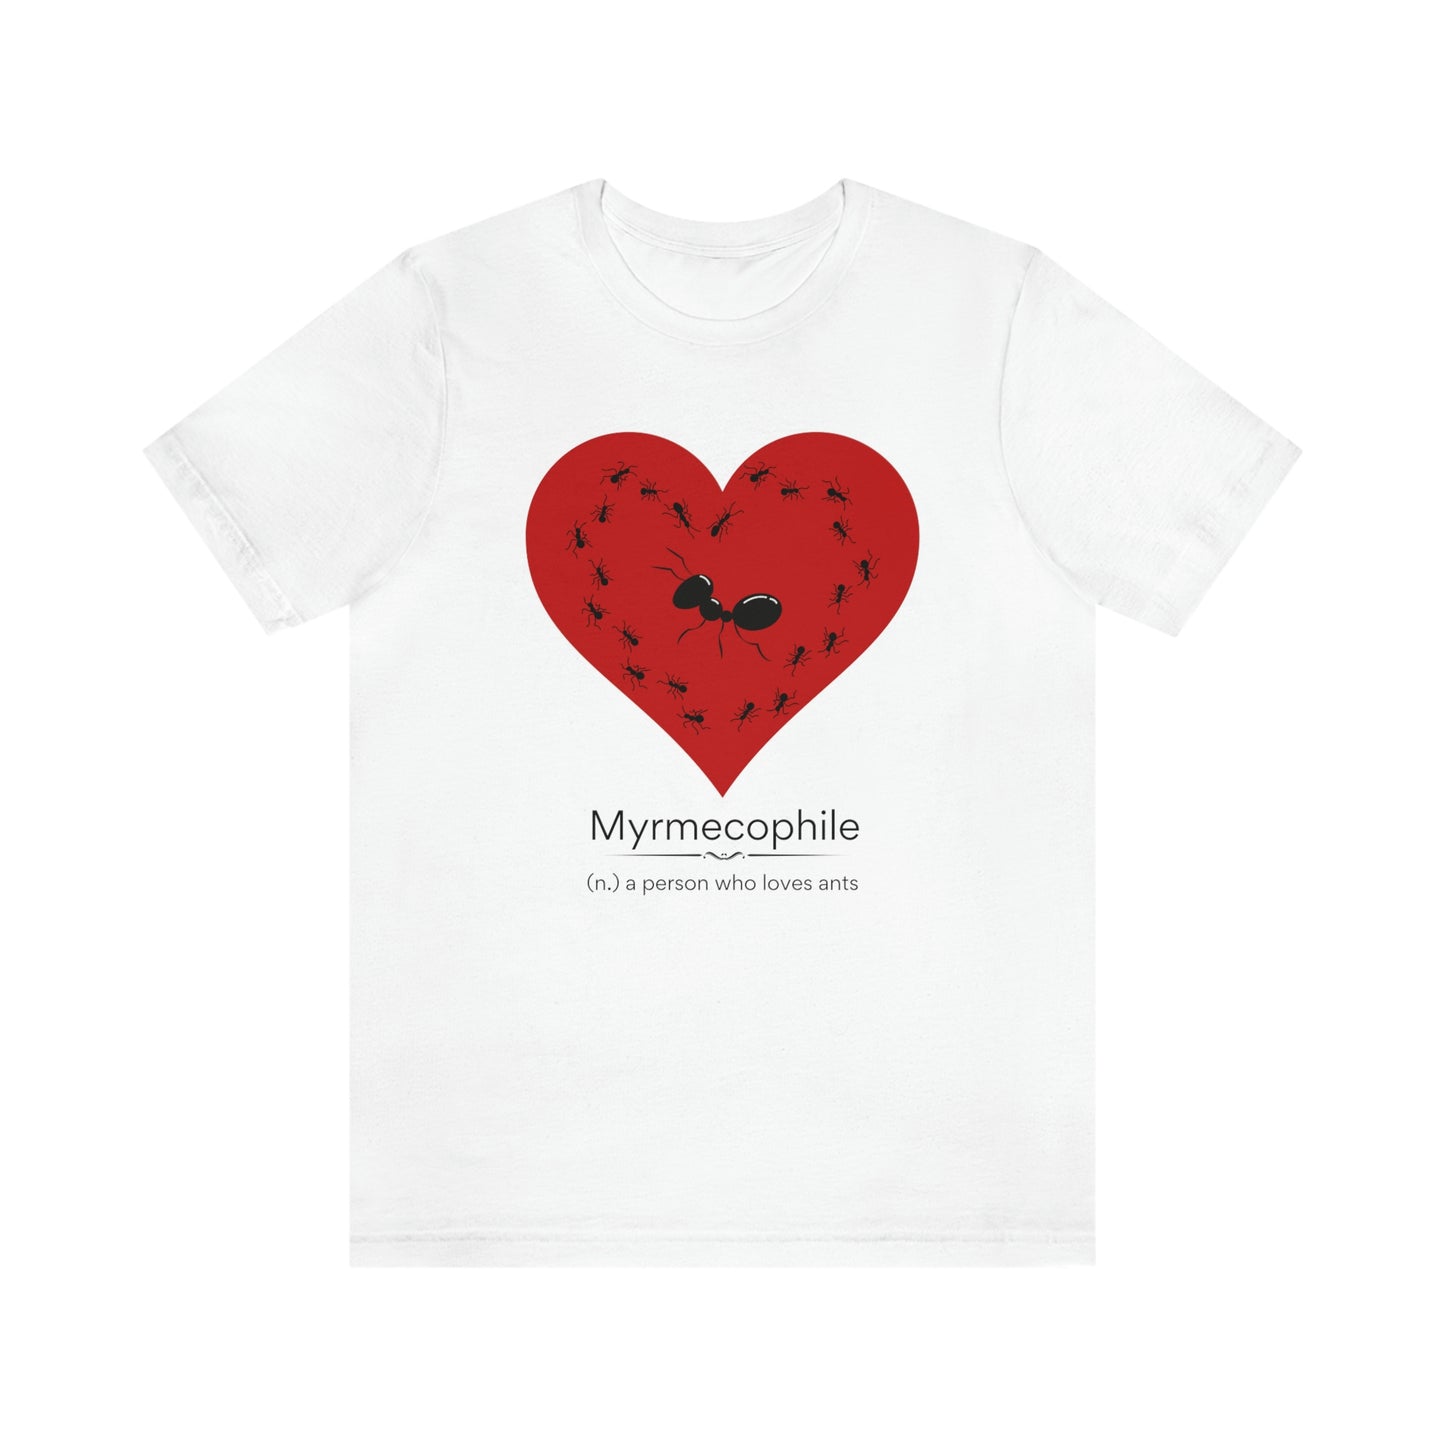 Myrmecophile - Ant lover T-shirt